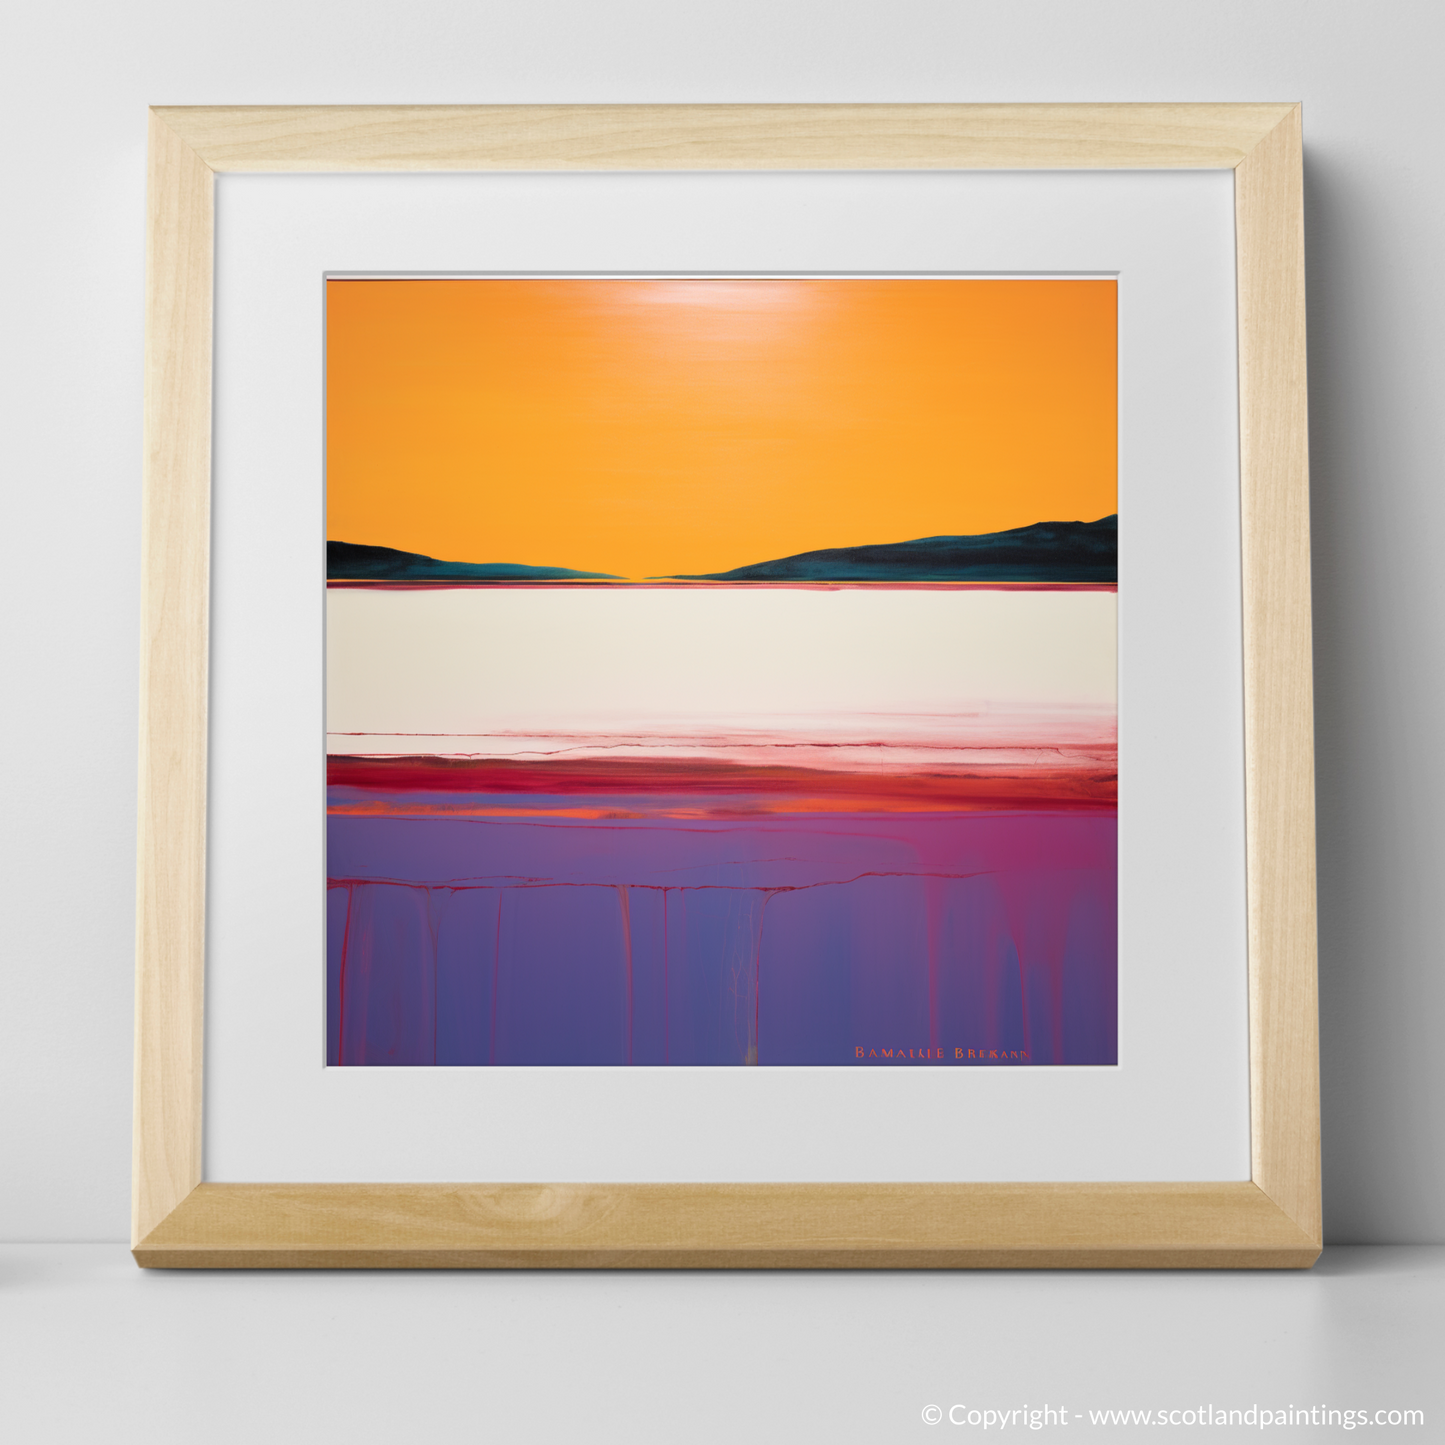 Sunset Serenade at Balnakeil Bay